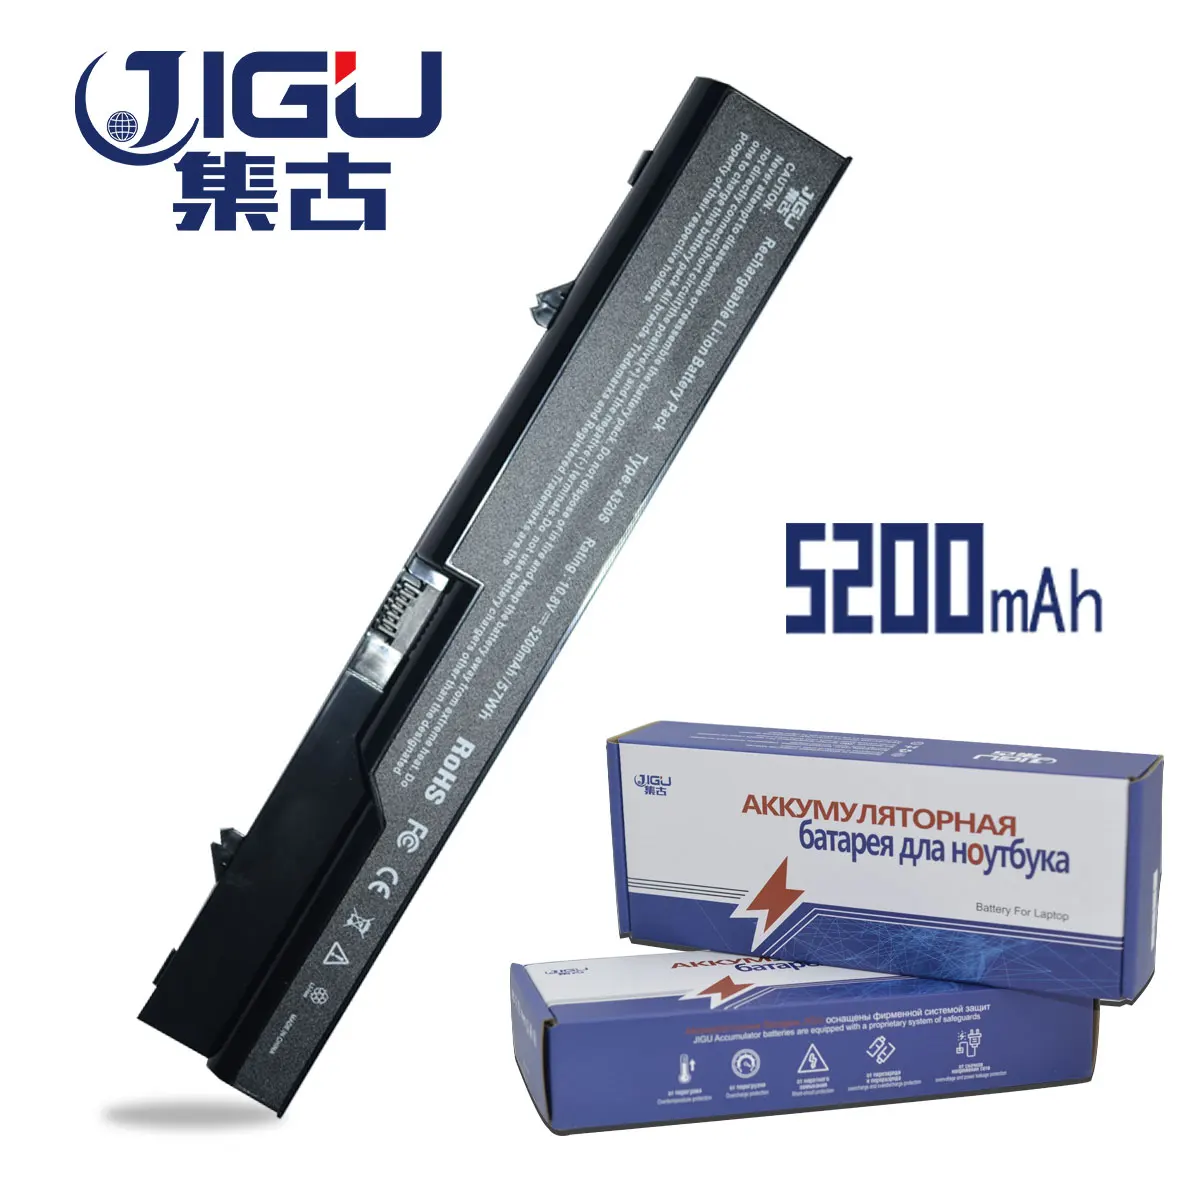 JIGU 5200 мАч аккумулятор для ноутбука HP/Compaq 320 321 325 326 420 421 425 620 621 625 PH06 PH09 HSTNN-UB1A HSTNN-Q78C